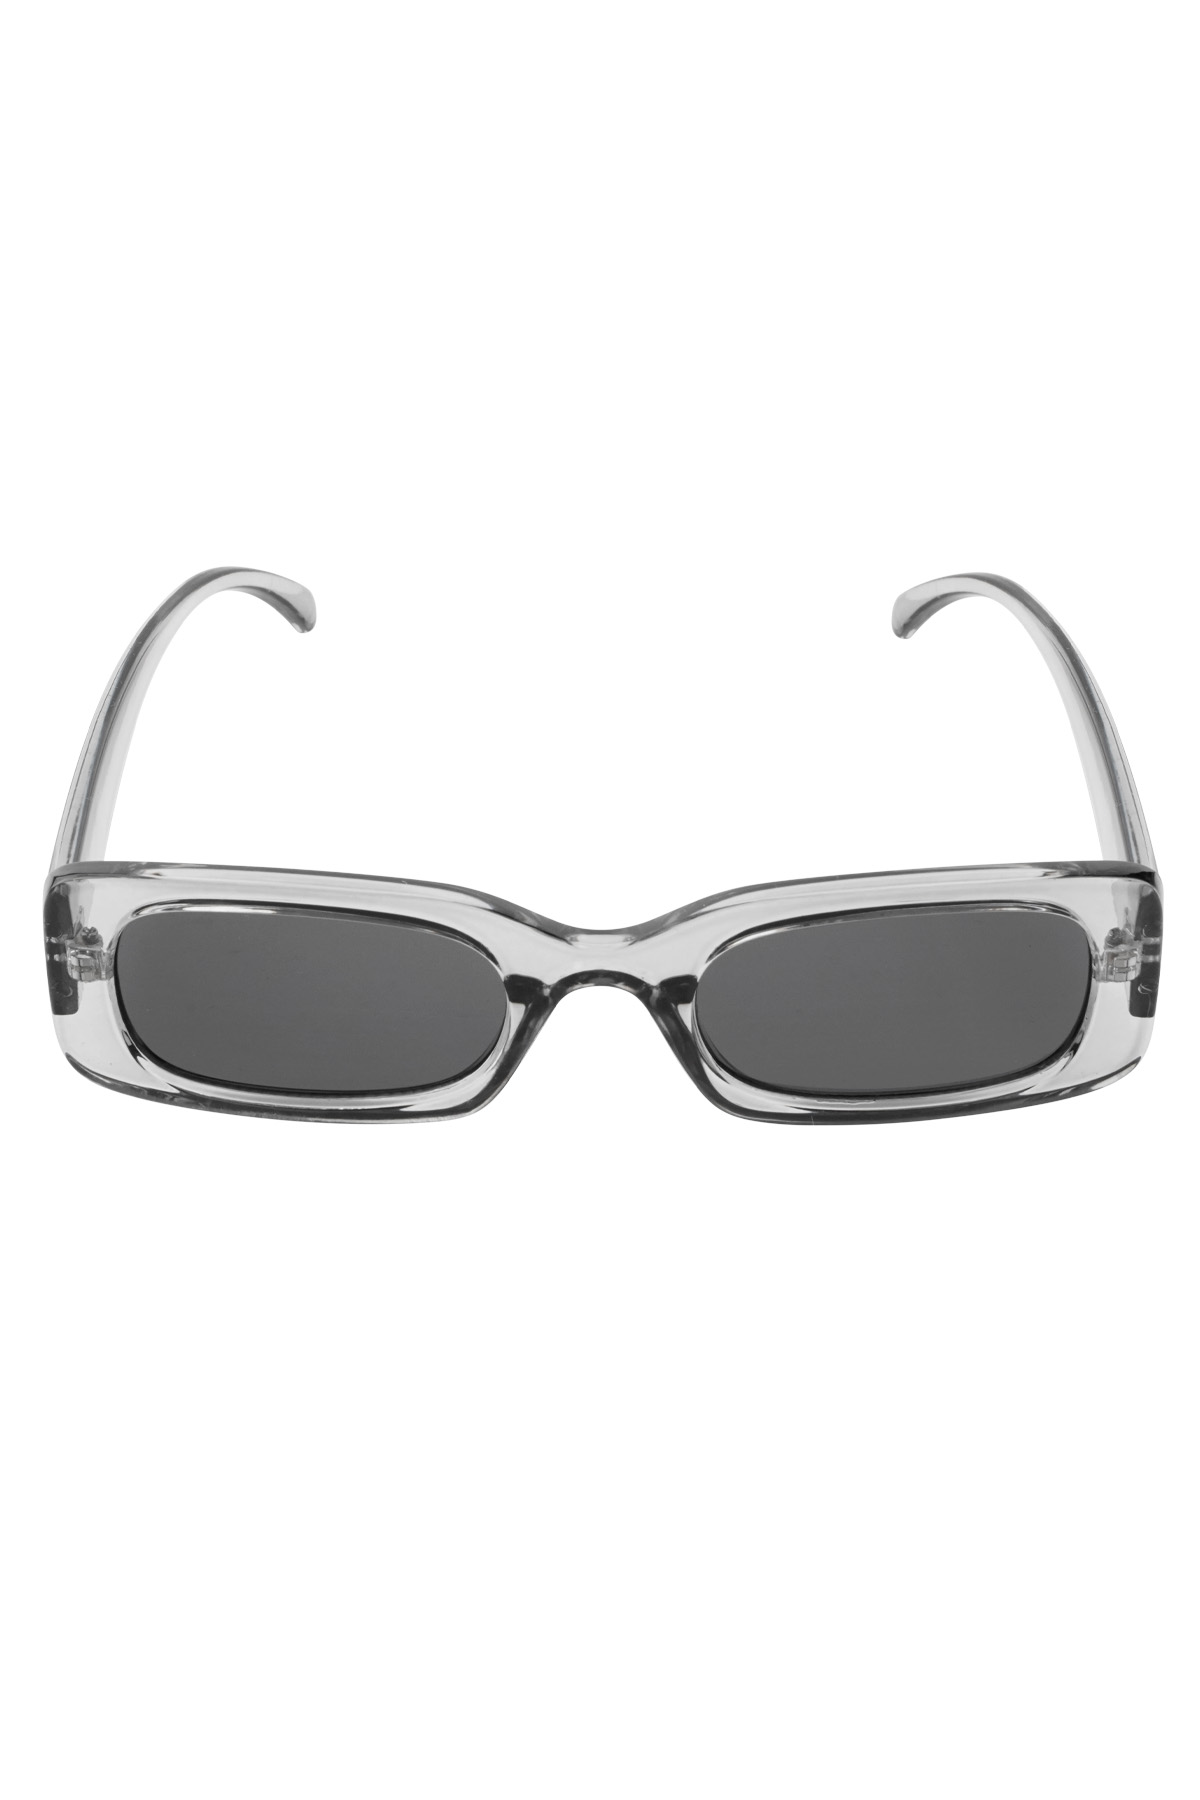 Şeffaf renkli güneş gözlüğü - siyah h5 Resim5